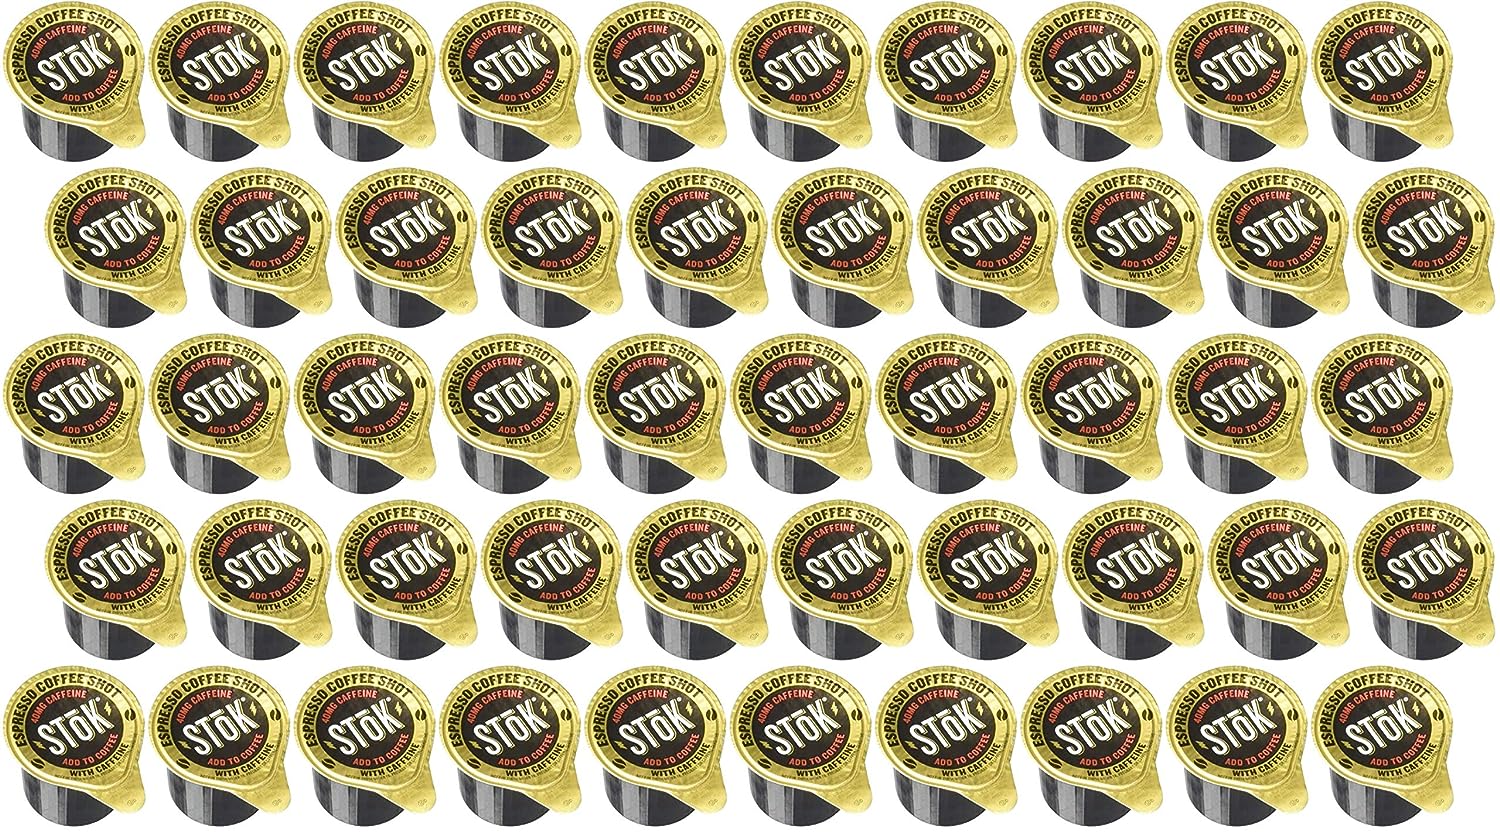 50 StoK Caffeinated Black Coffee Shots